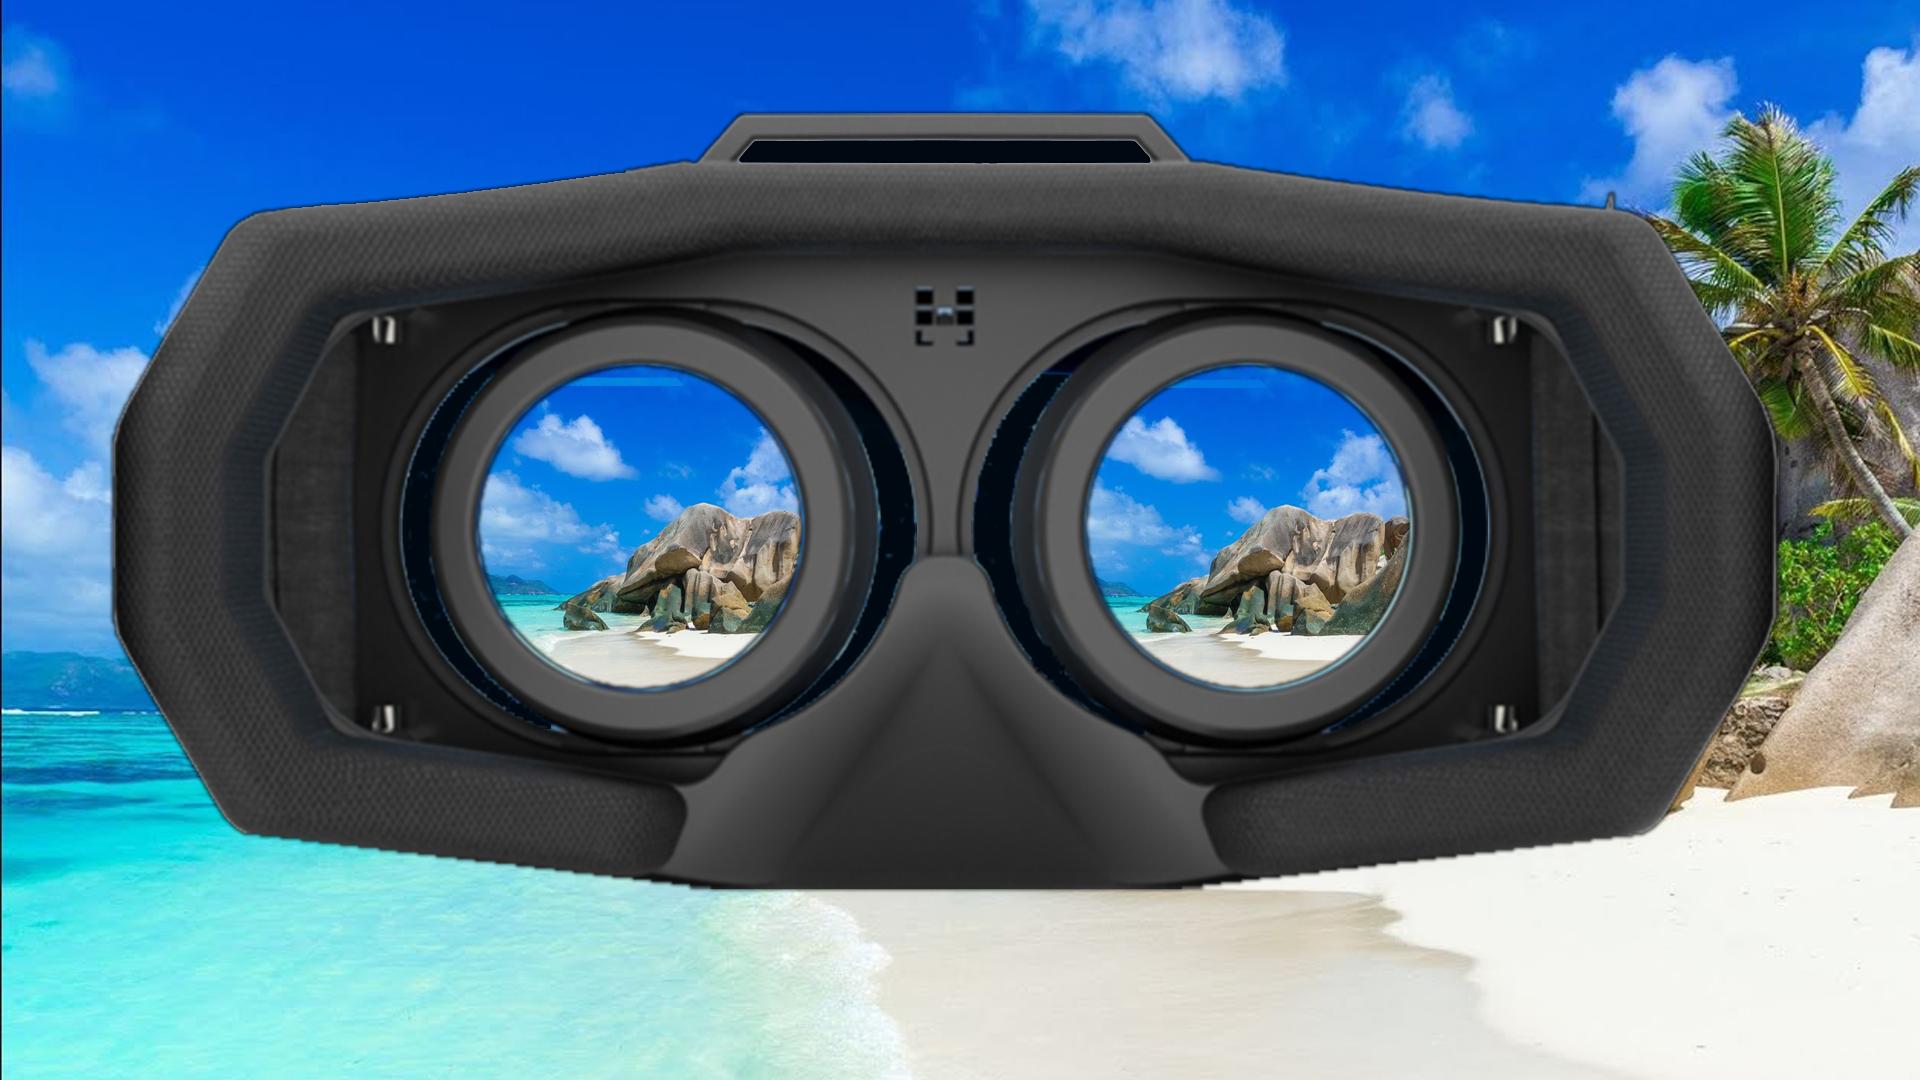 Видео для vr 360 градусов. VR видео. 3d VR 360. Видео для ВР очков 360. VR COOLPAINTR VR Deluxe Edition.